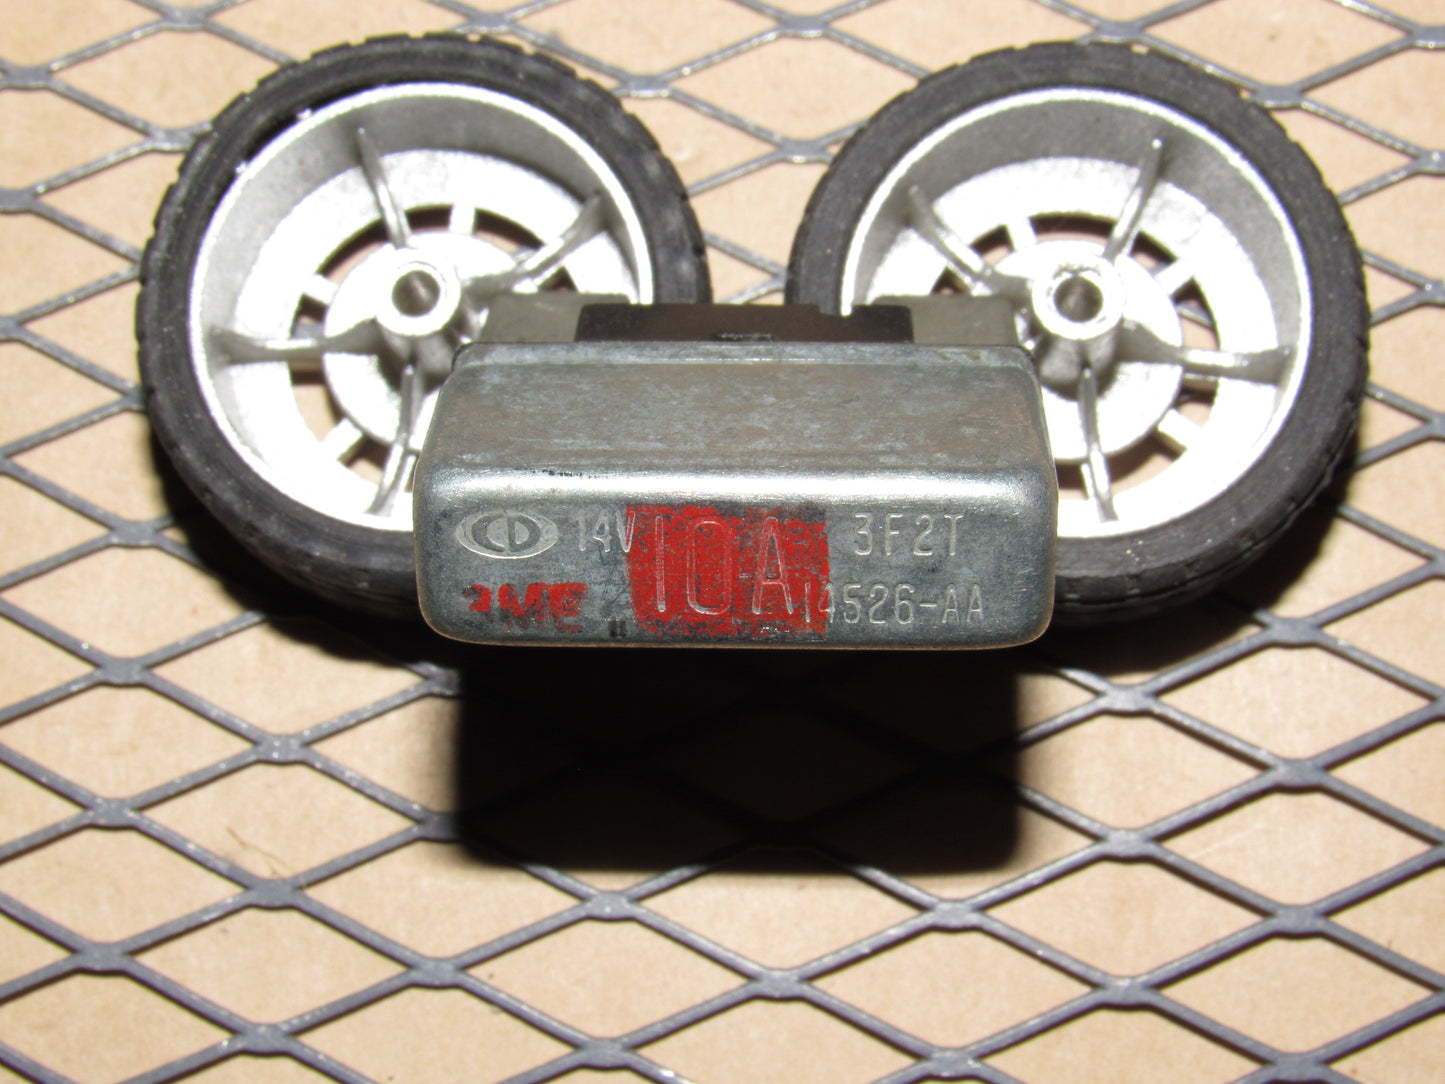 Ford Metal Maxi Fuse 10A / 3F2T 14526-AA